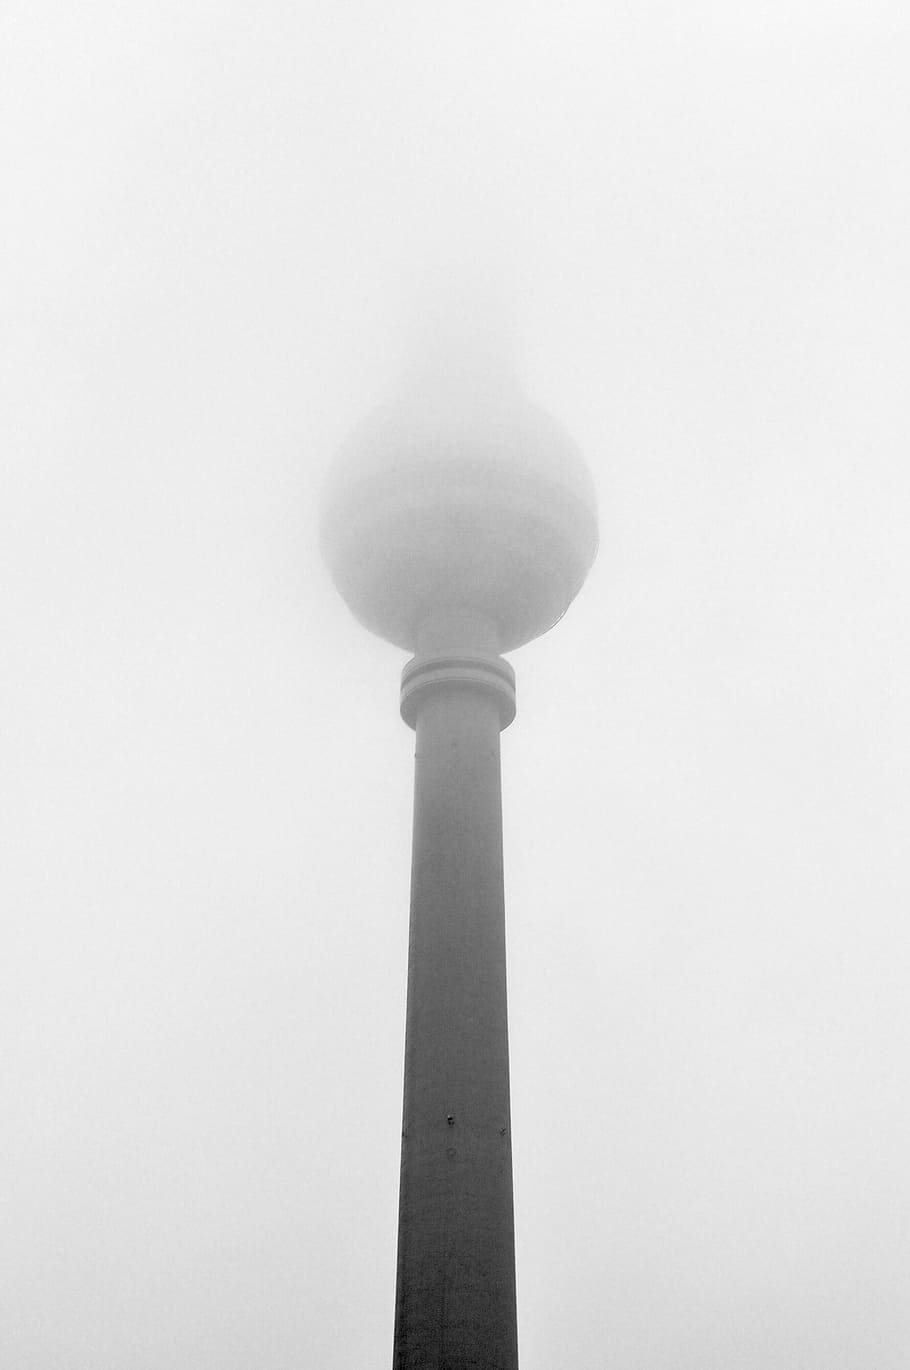 Белая башня, архитектура, здание, Инфраструктура, Башня, Ориентир, небоскреб, туман, на открытом воздухе, день